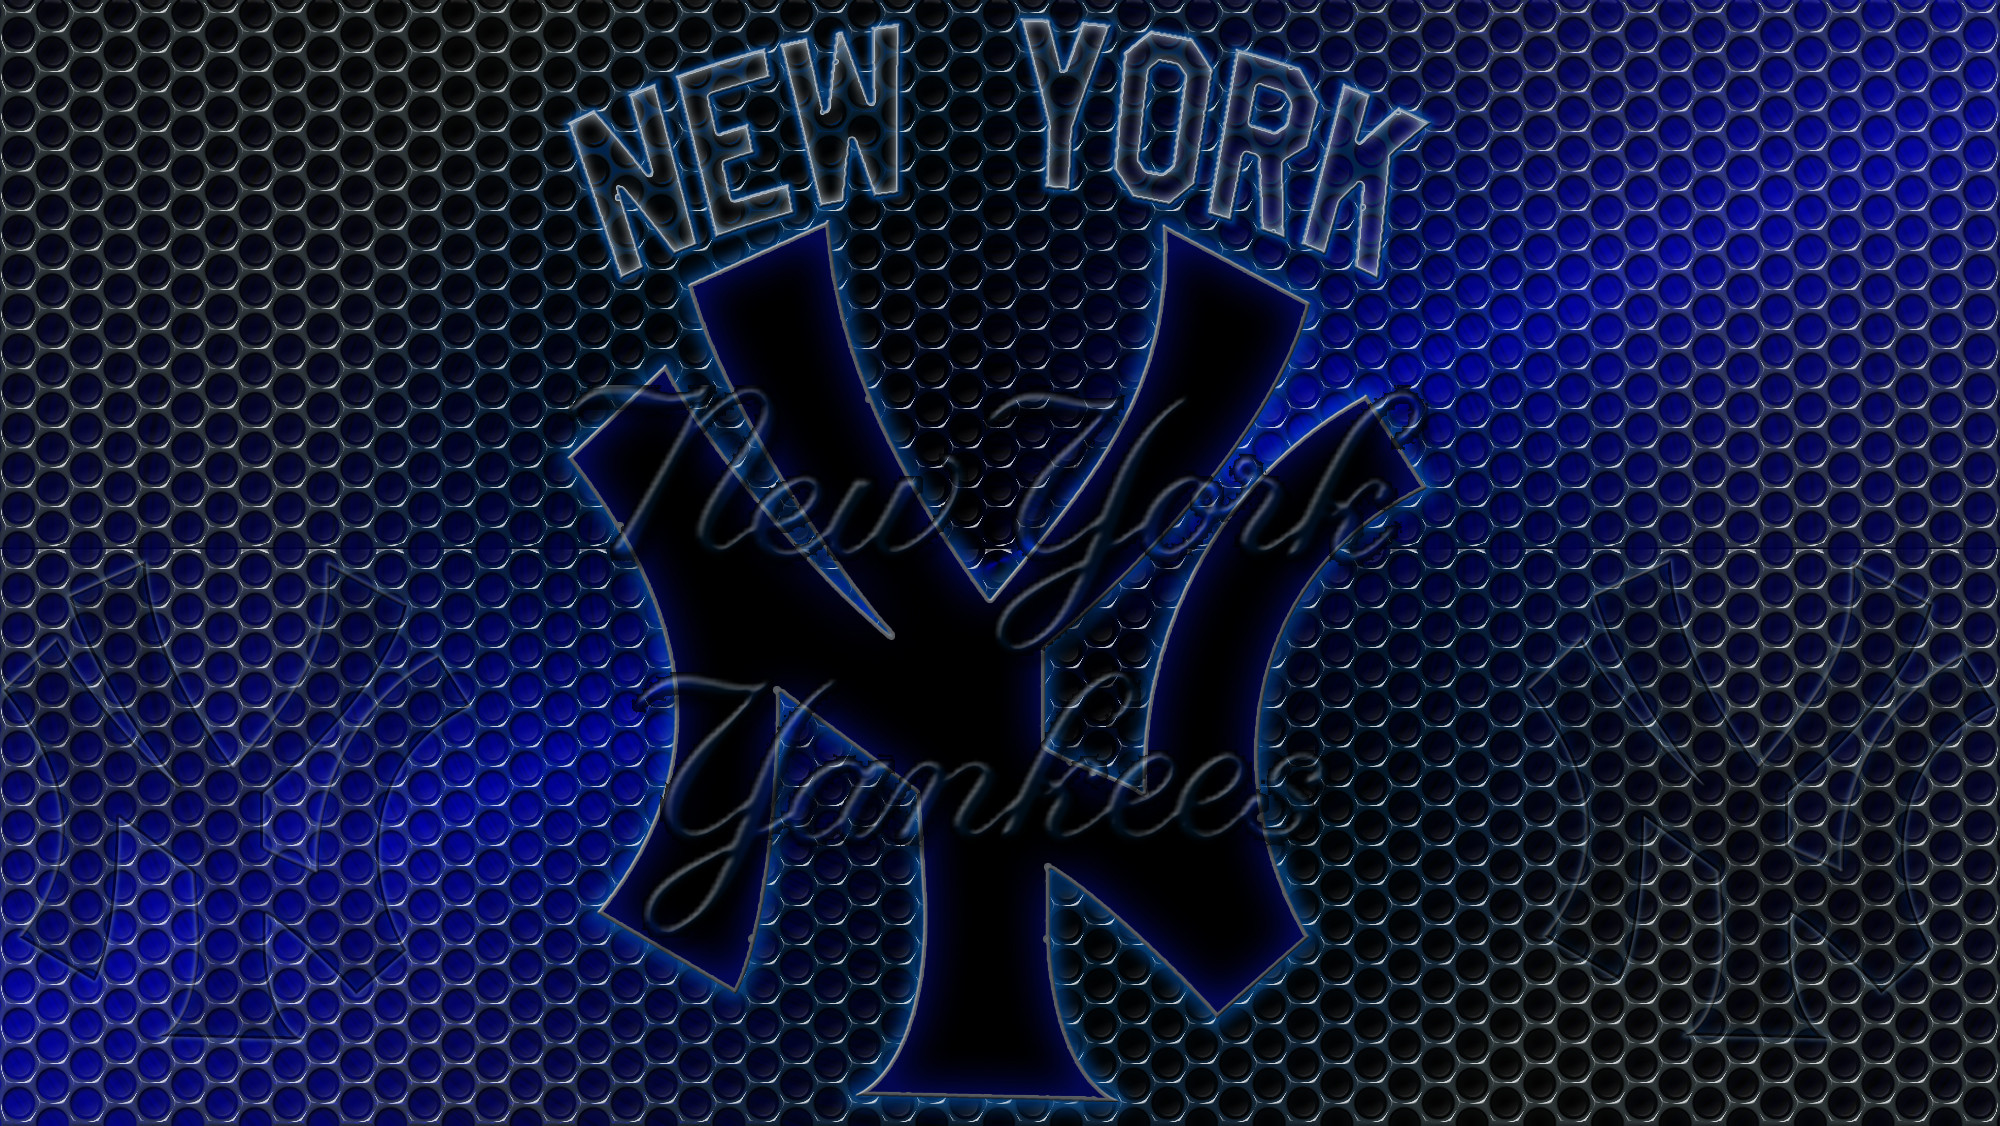 2000x1126 New York Yankees Logo Grid Wallpaper | Free Download Wallpaper .